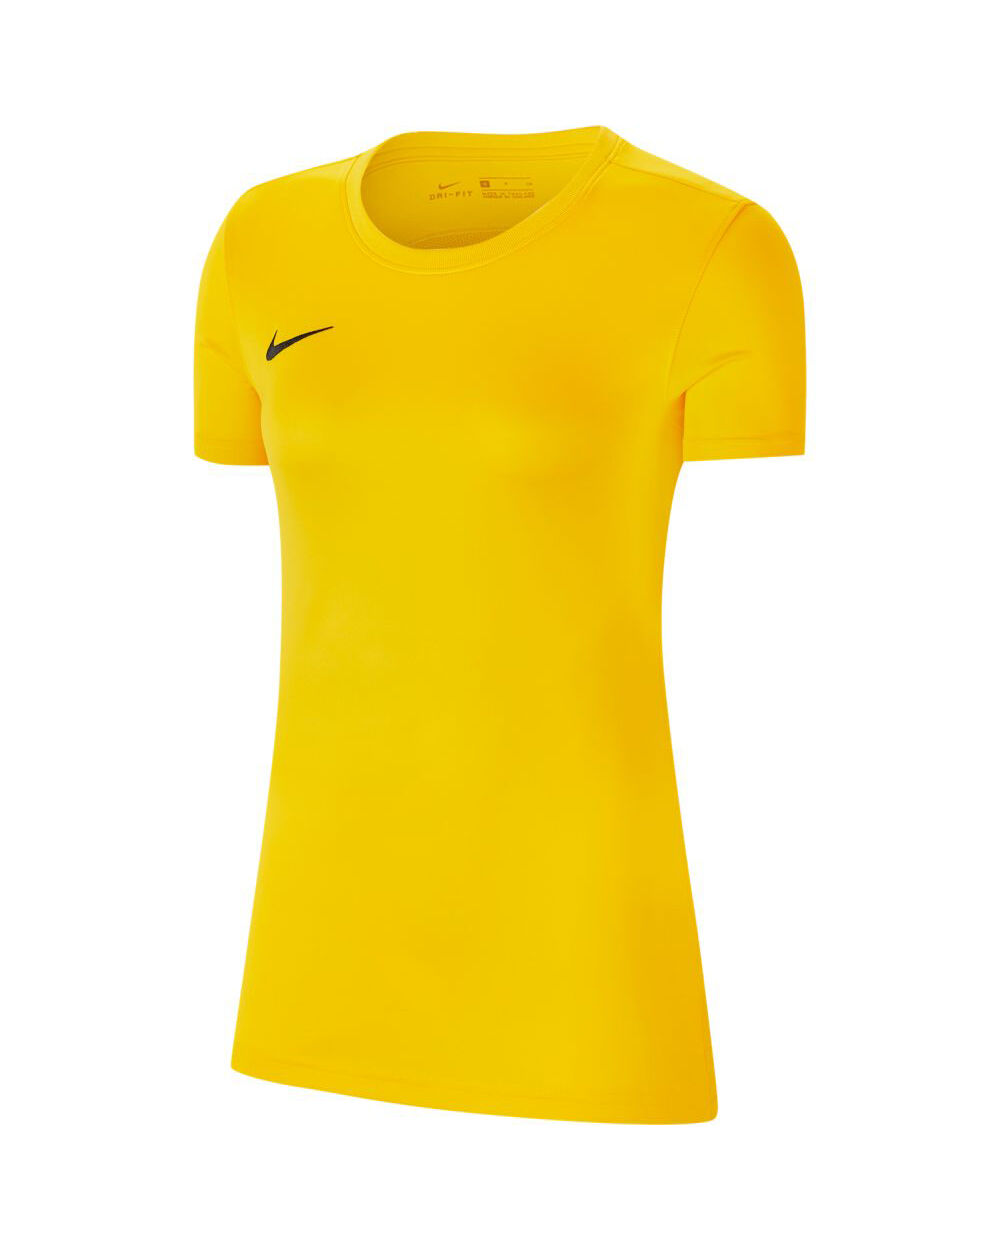 Camiseta Nike Park VII Amarillo para Mujeres - BV6728-719